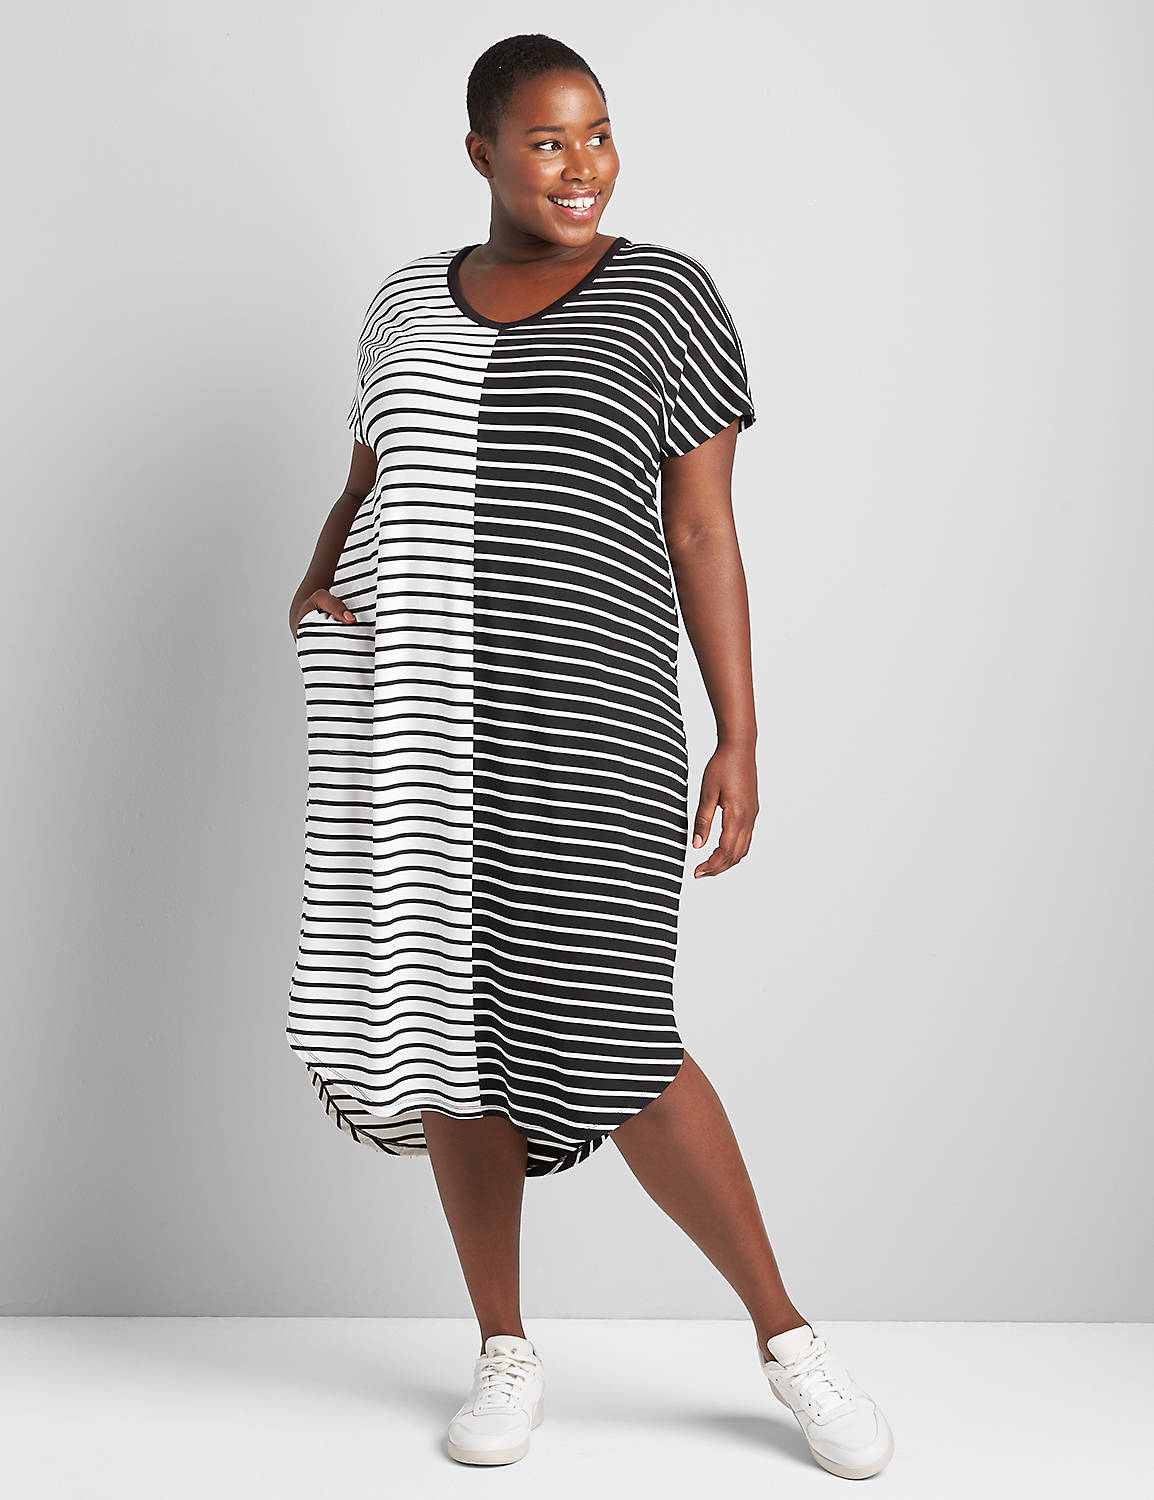 LIVI Striped Midi Dress Product Image 1